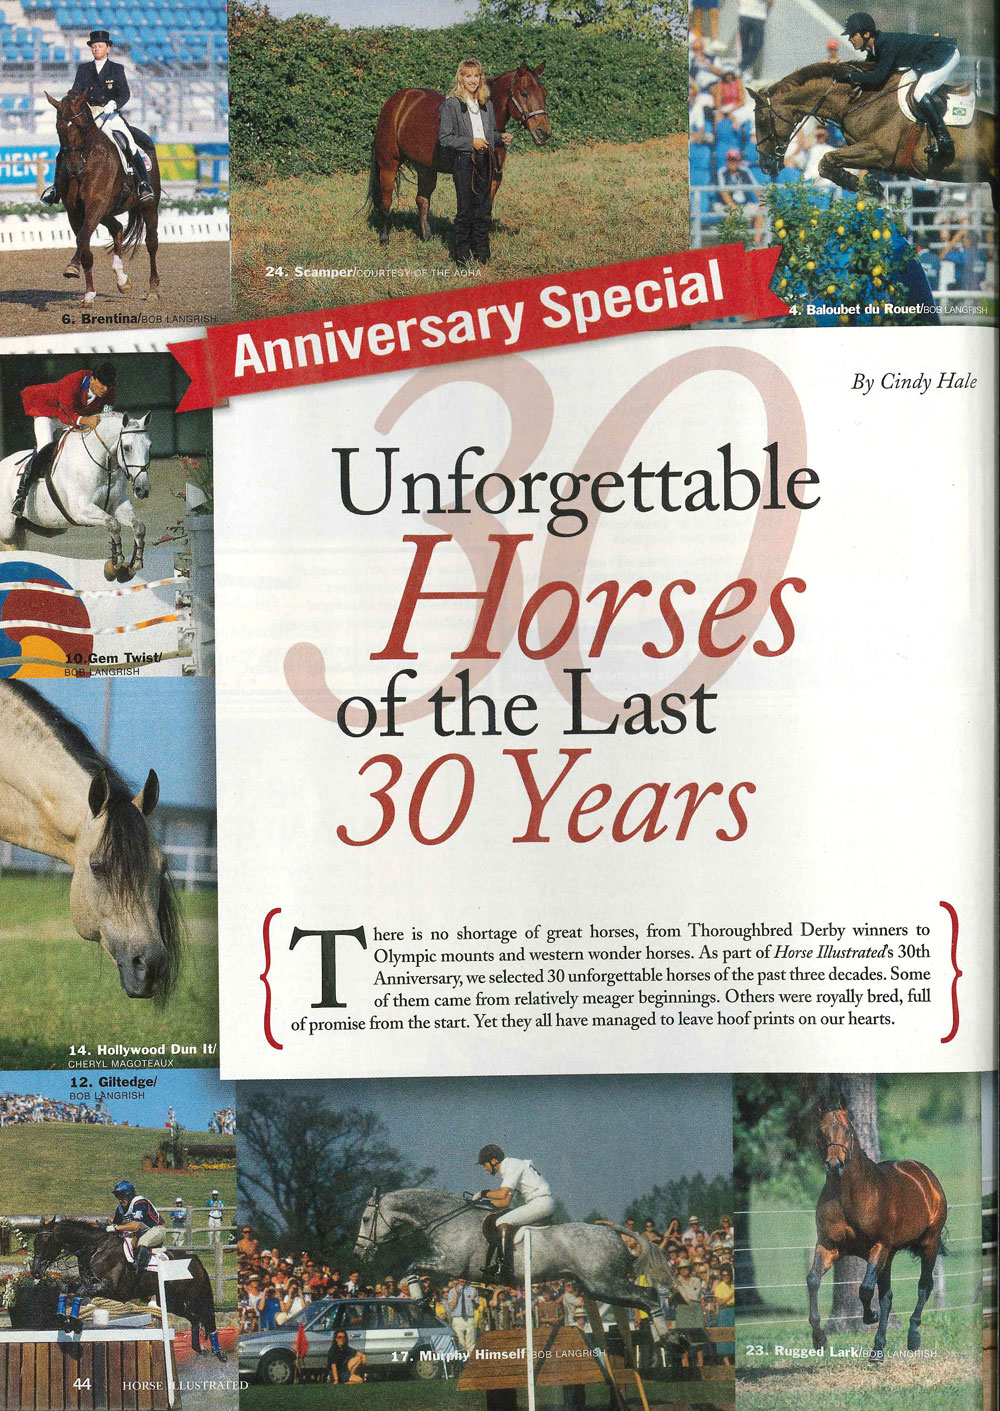 40 Years of Horses